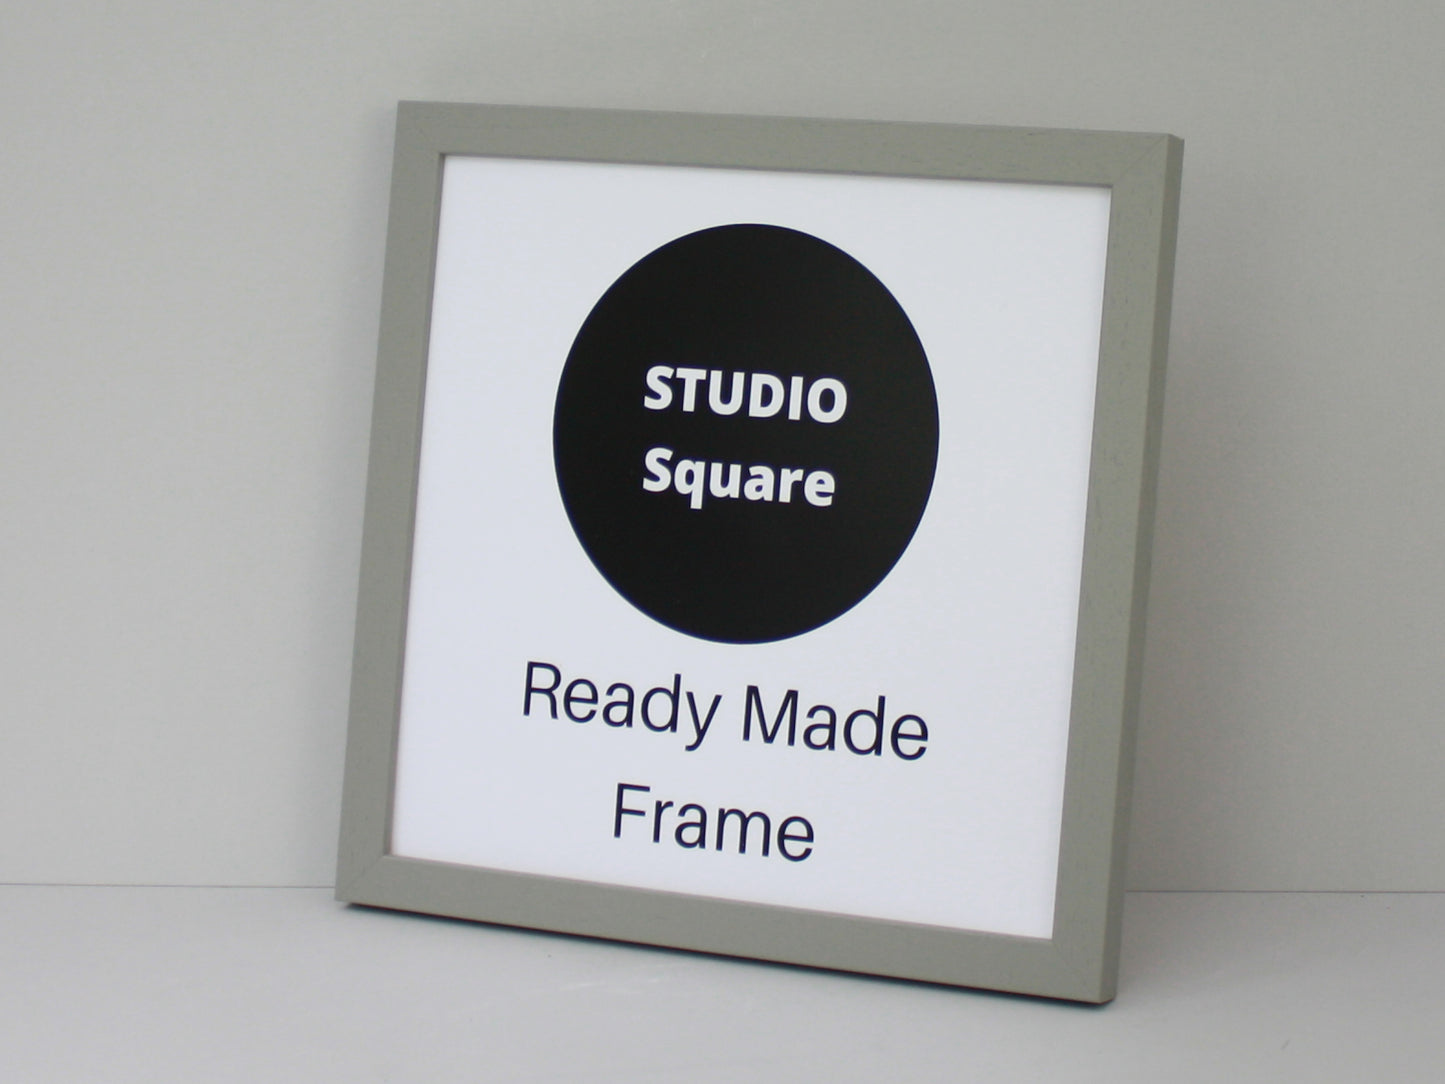 Gallery Wall Set - 6 Pcs Square Wooden Photo Frames. Studio Range. Various Colours.